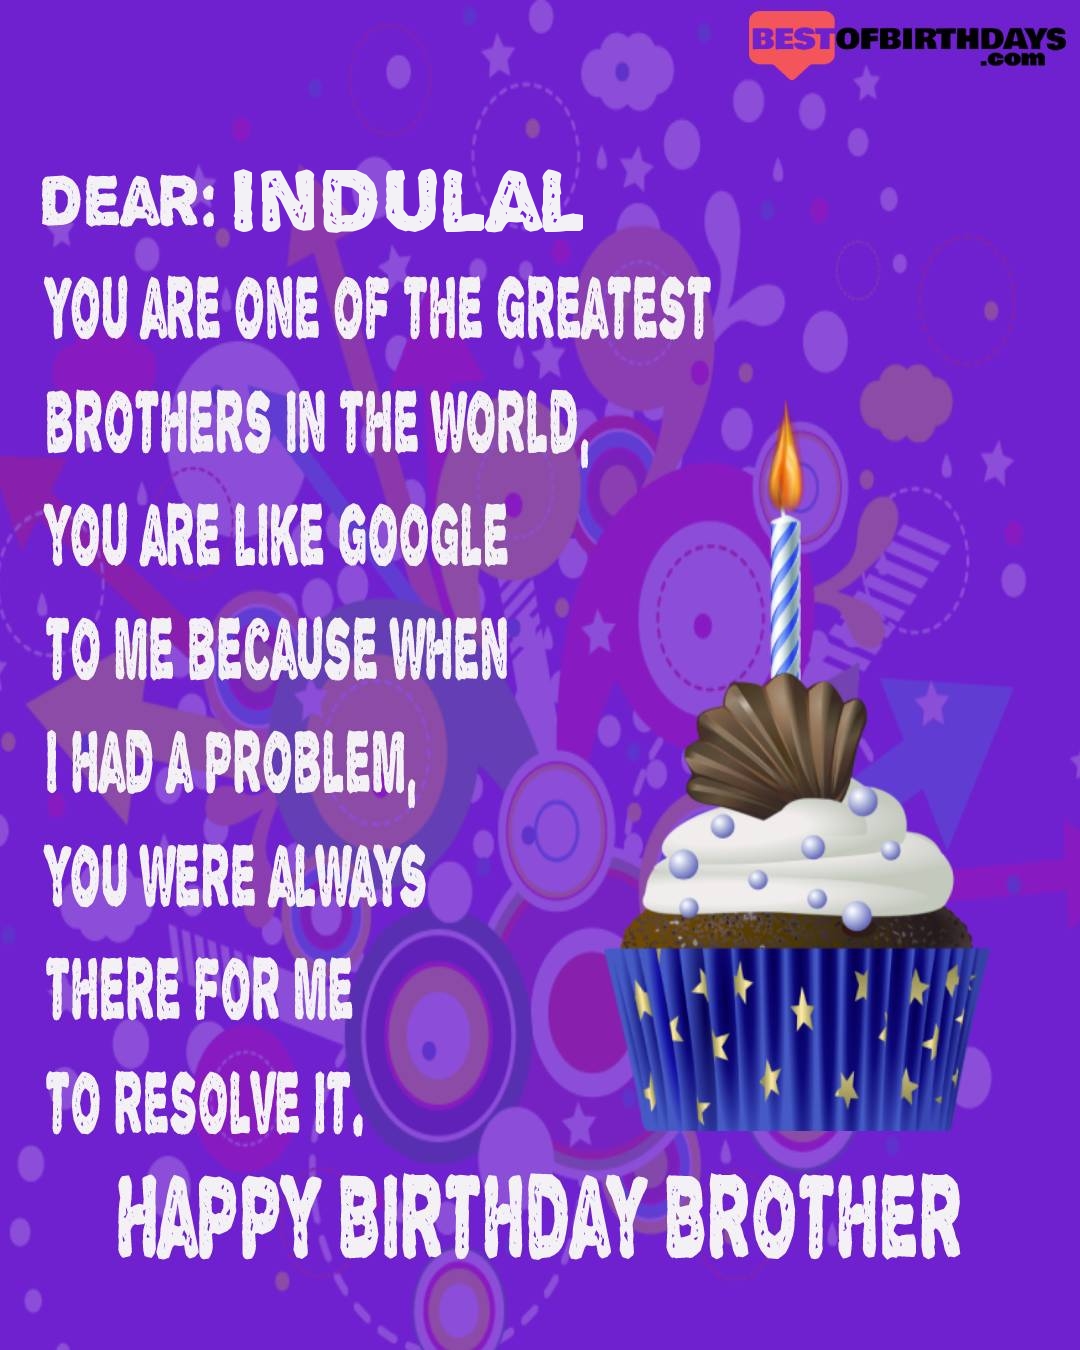 Happy birthday indulal bhai brother bro